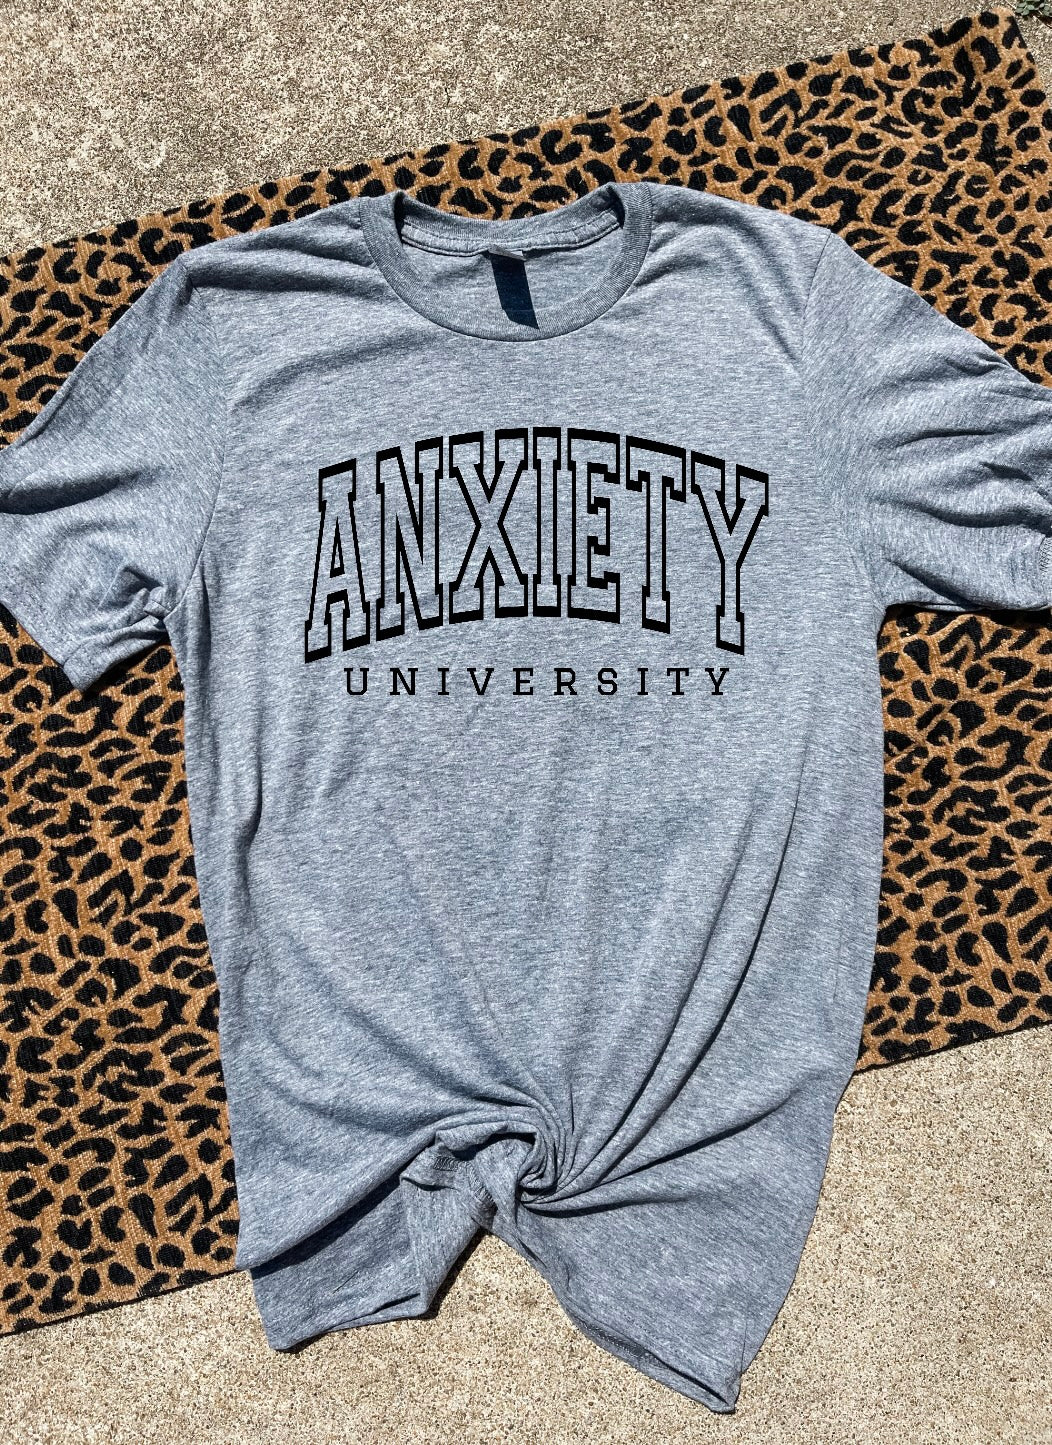 Anxiety University Charcoal Tee